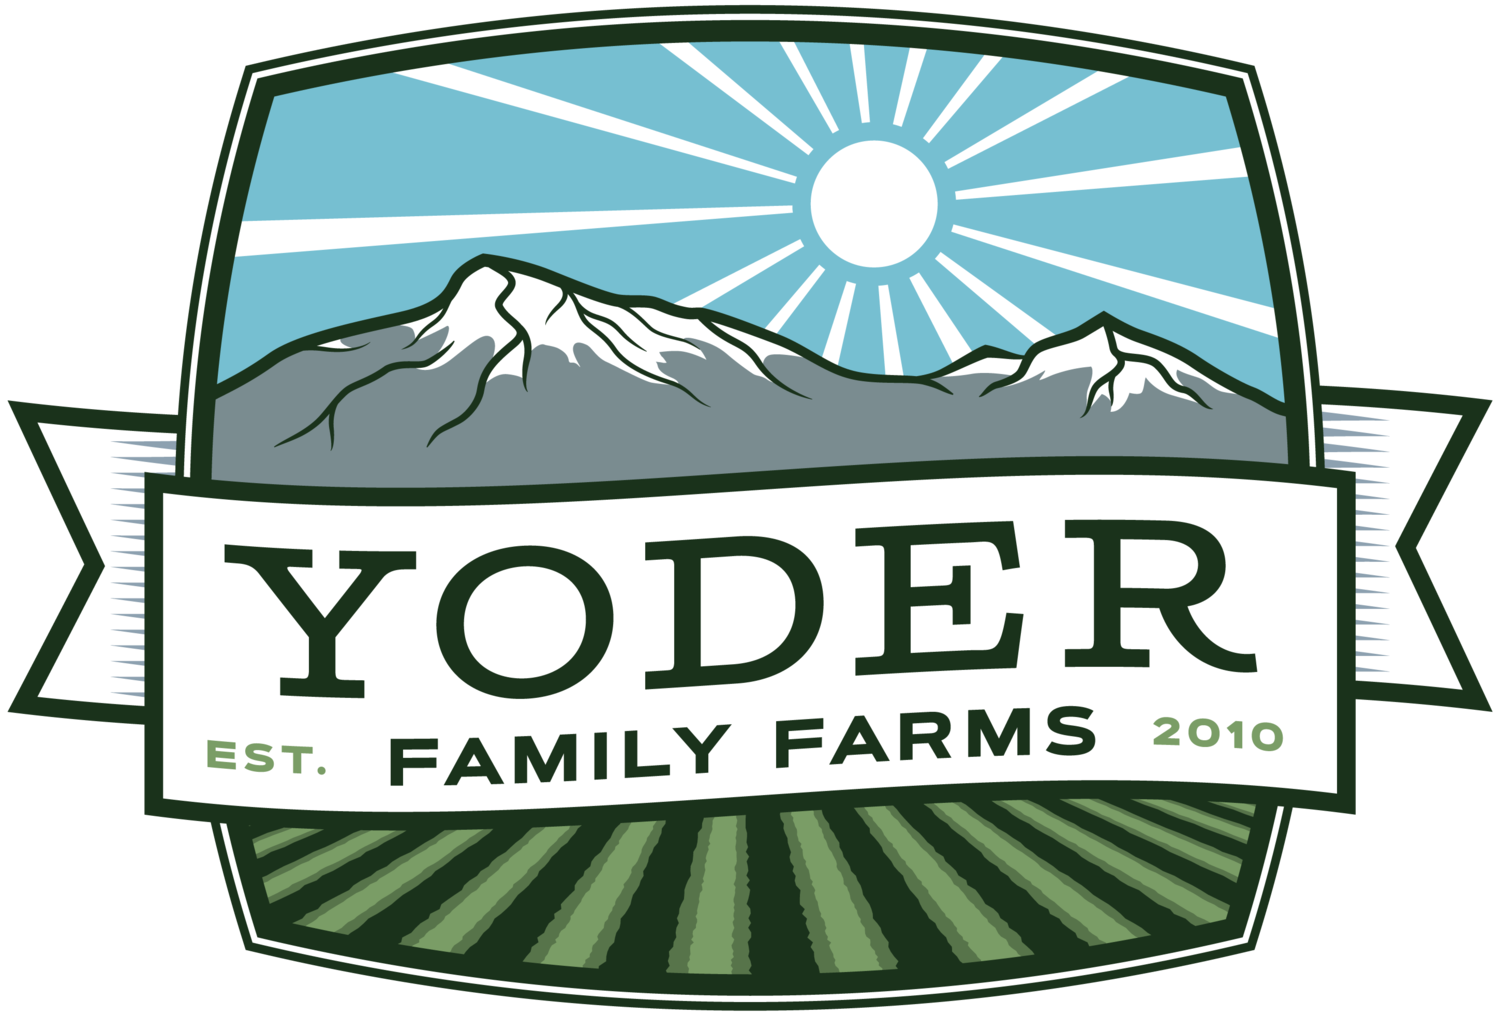 Yoder Family Farms 